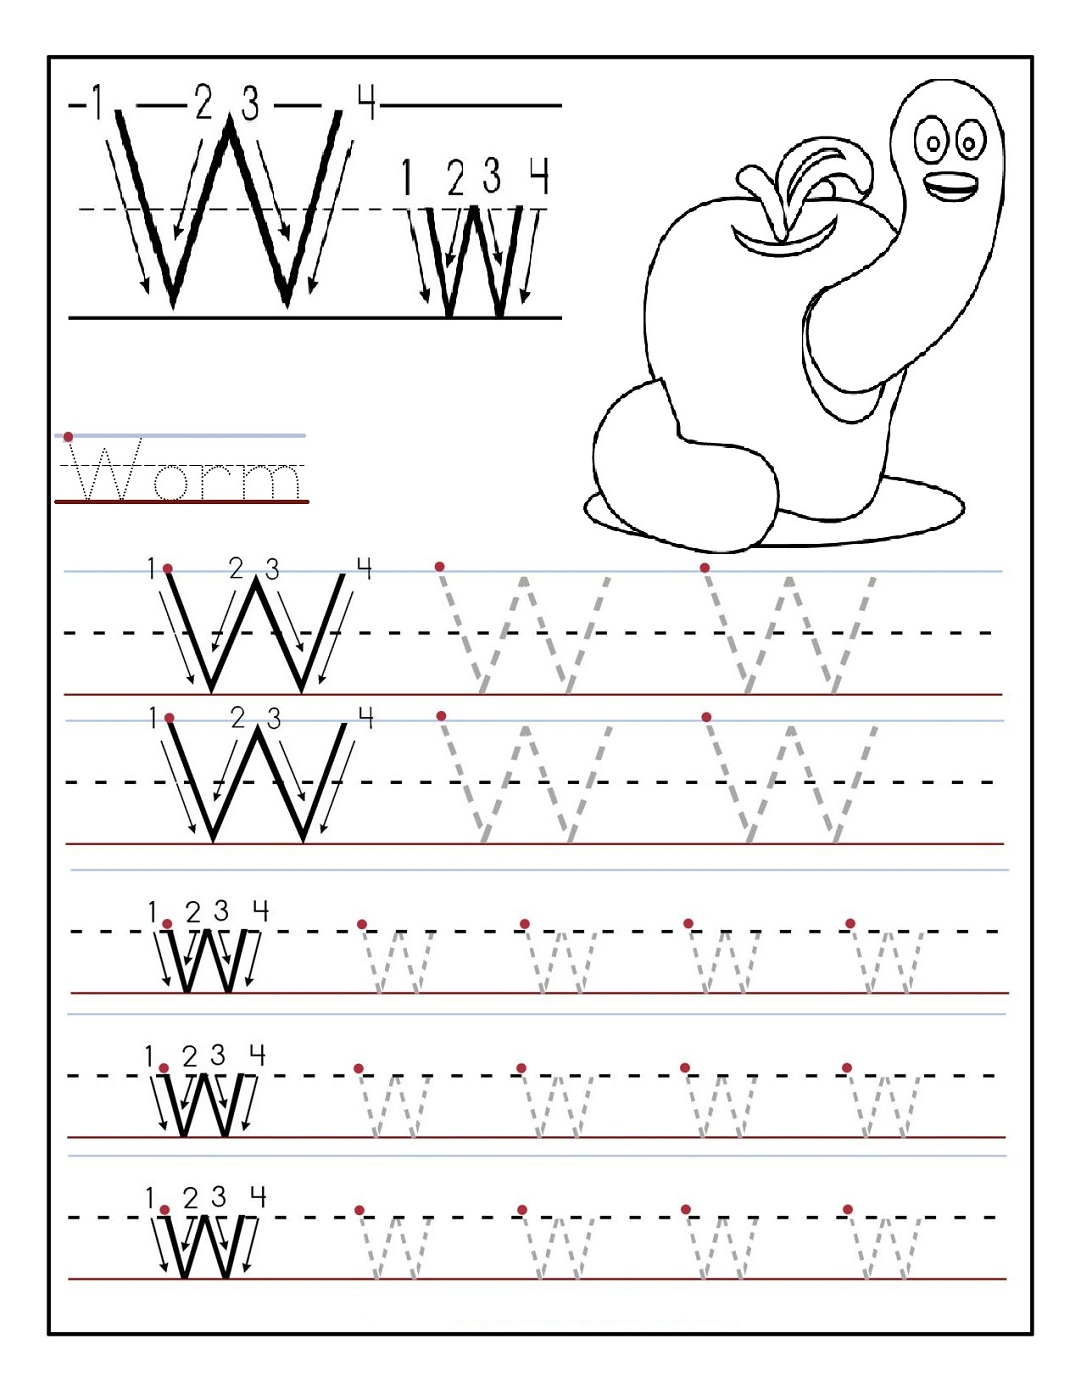 printable-handwriting-kindergarten-writing-sentences-worksheets-english-alphabet-worksheet-for